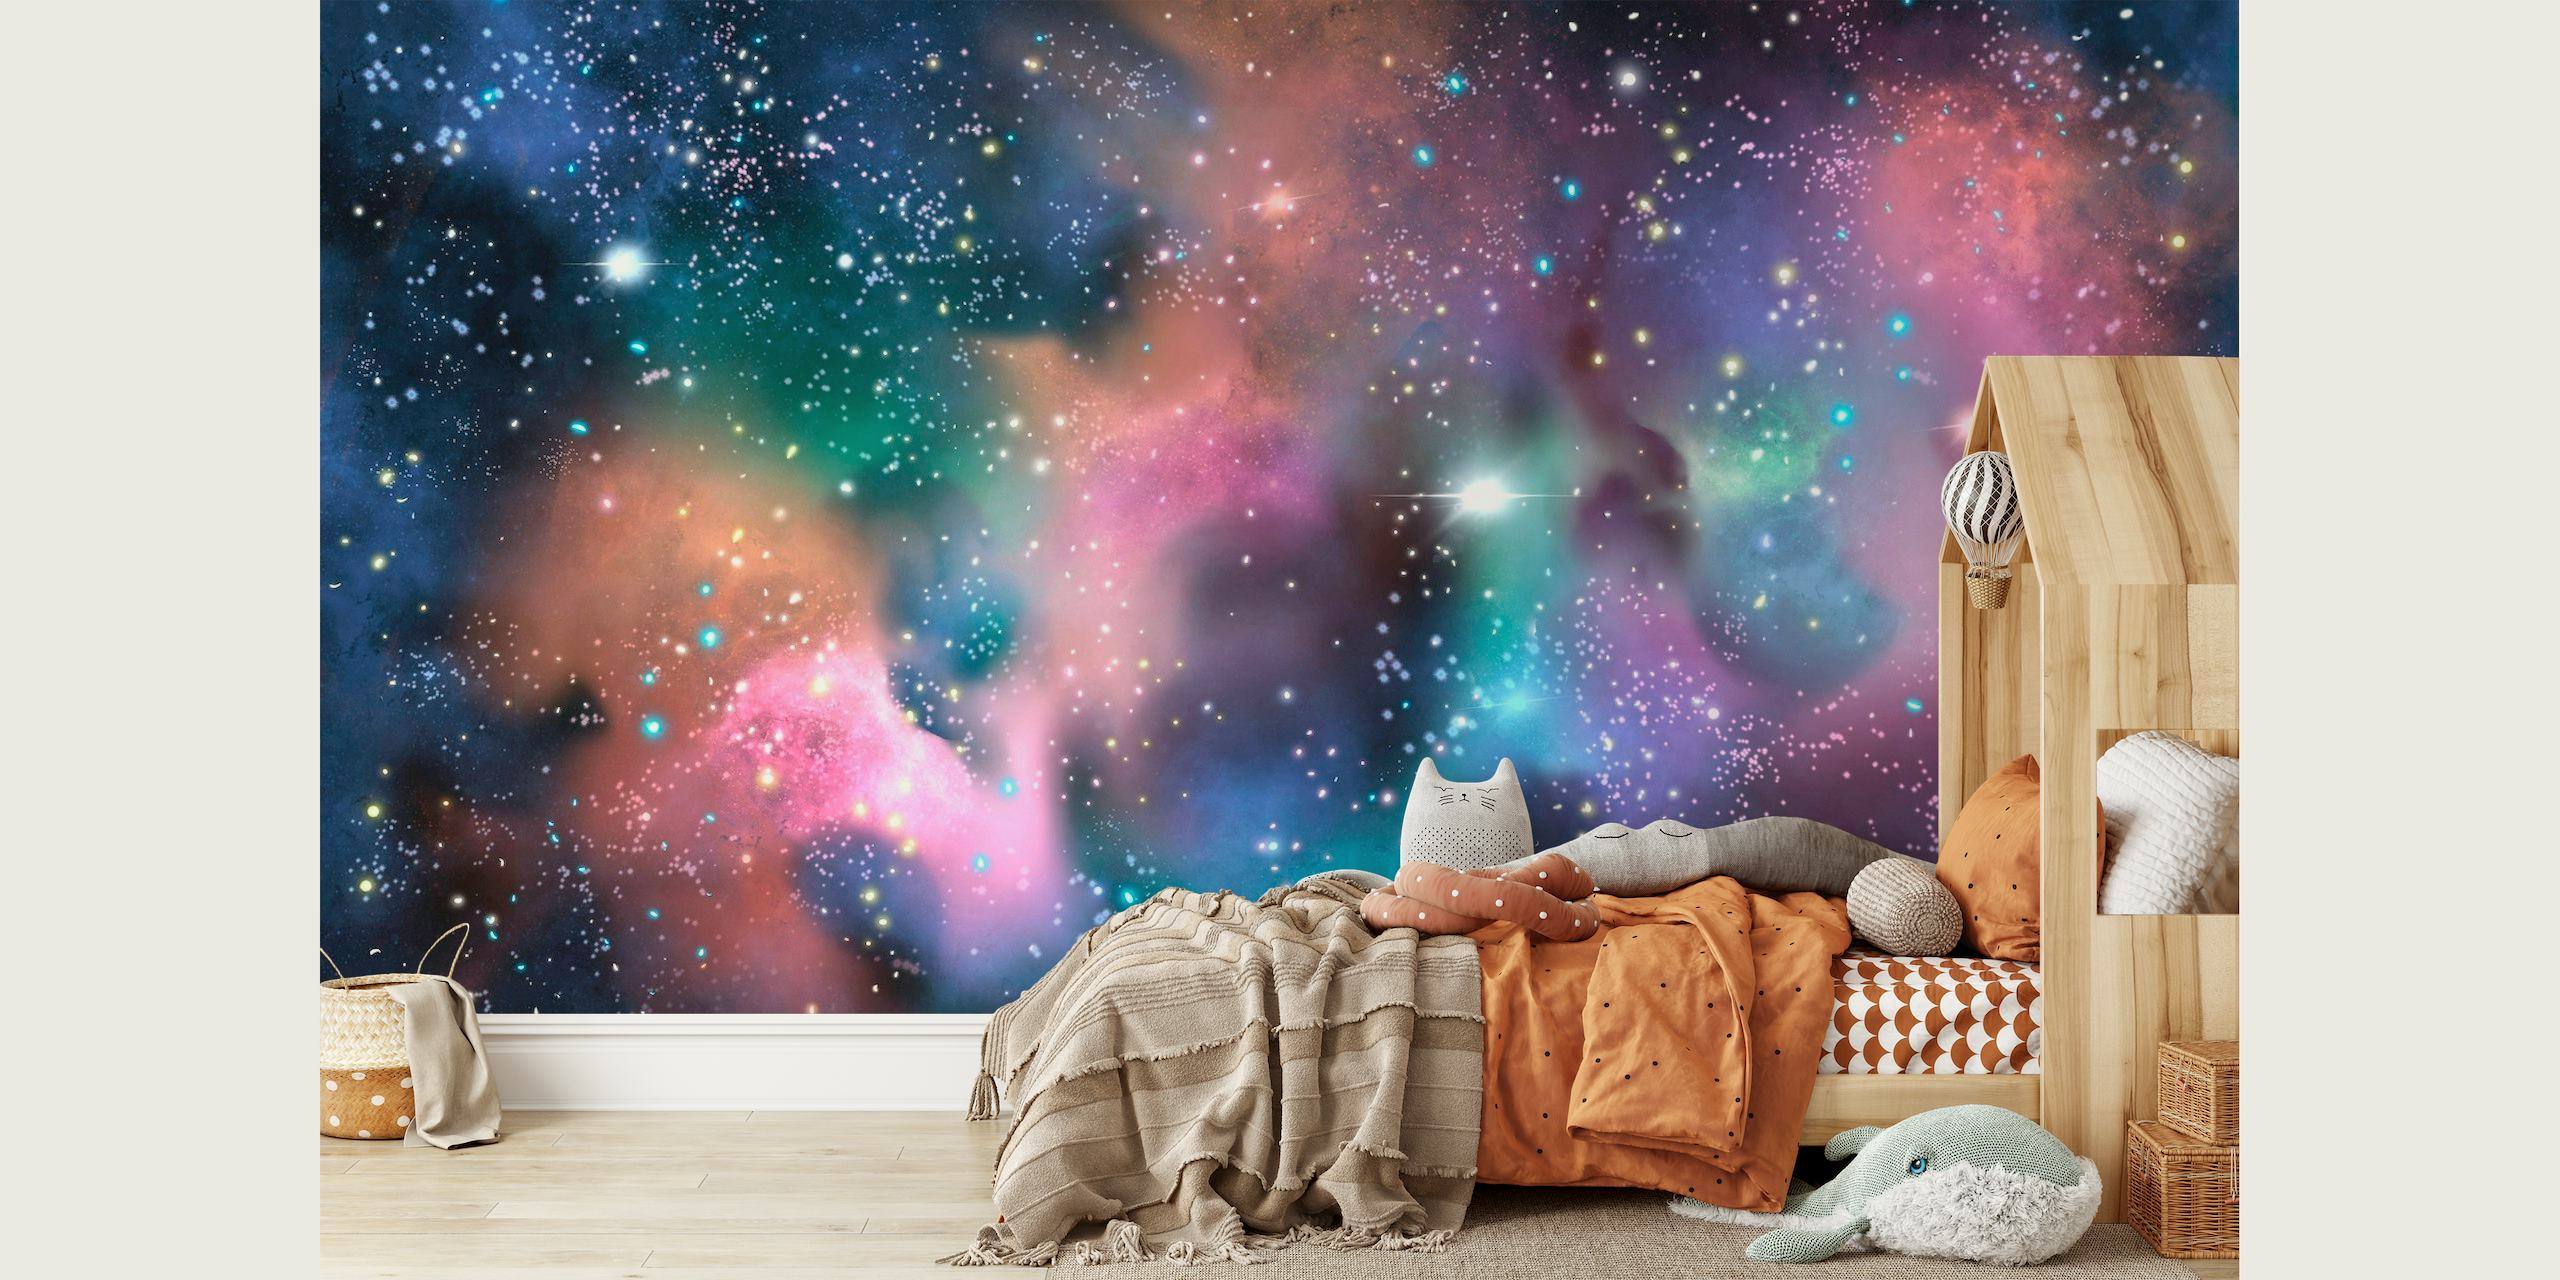 Dreamy Galaxy behang